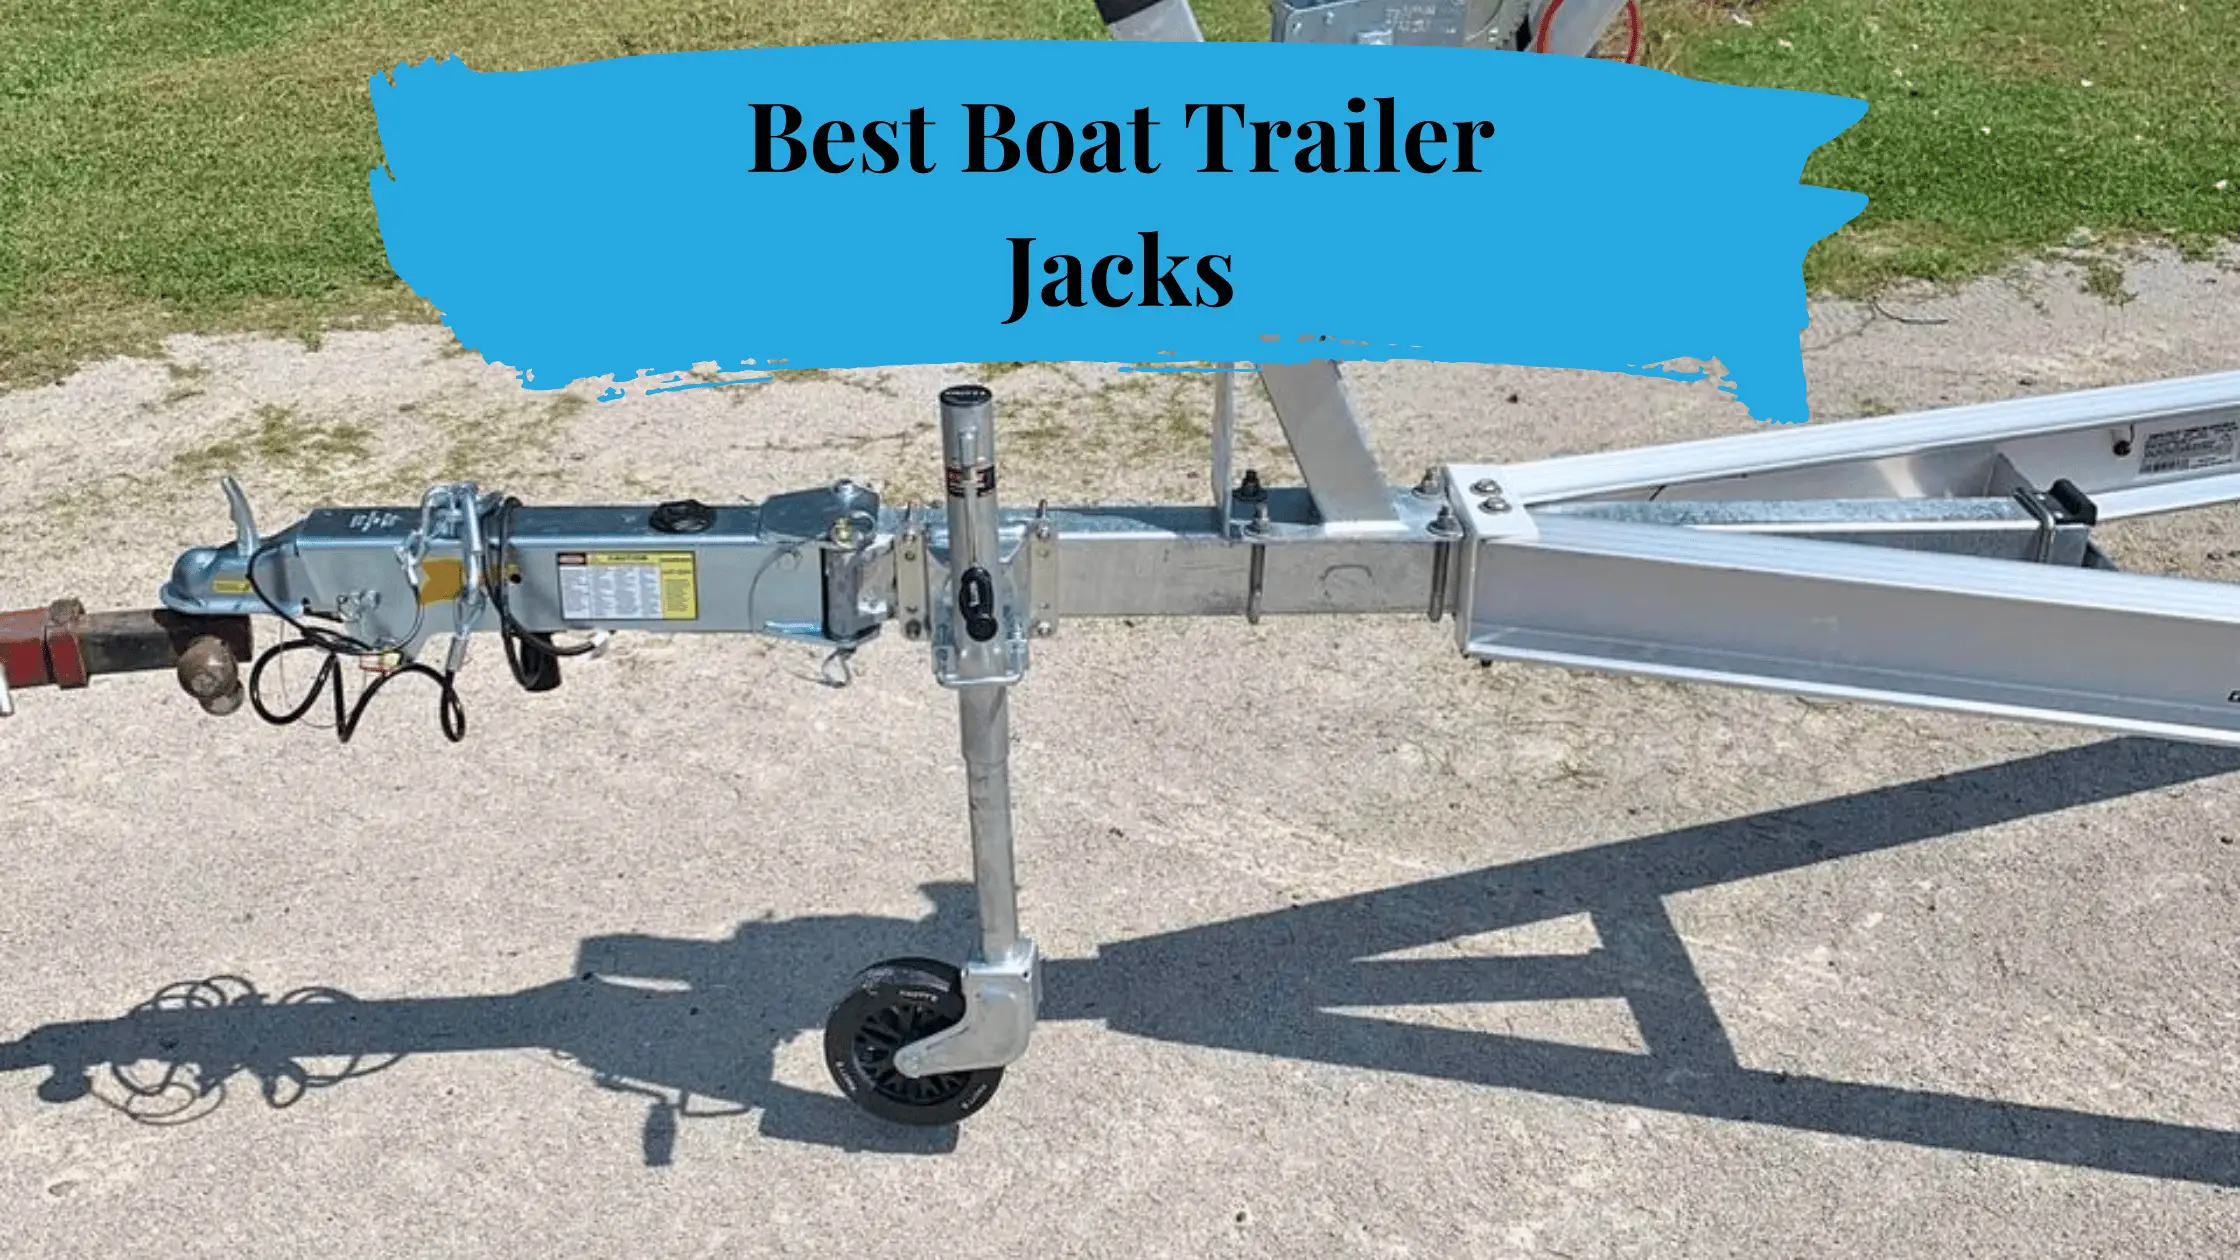 Best Boat trailer jacks